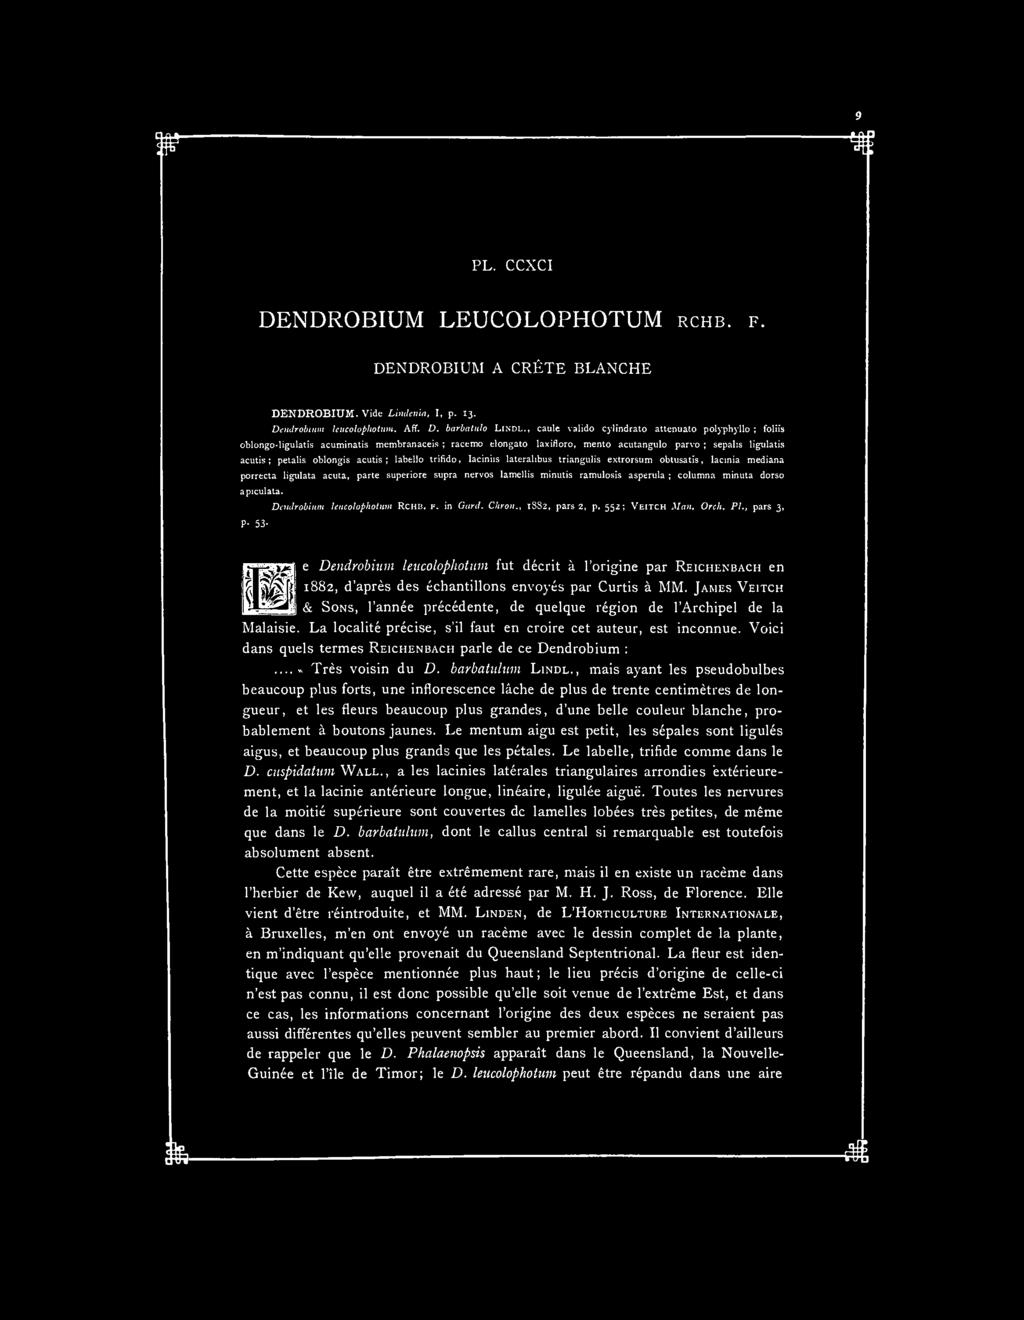 PL. CCXCI DENDROBIUM LEUCOLOPHOTUM RCHB. F. DENDROBIUM A CRÊTE BLANCHE DENDROBIUM. Vide Lindenia, I, p. 13. Dendrobinm ïeucolophotum. AfT. D. barbatulo LINDL.